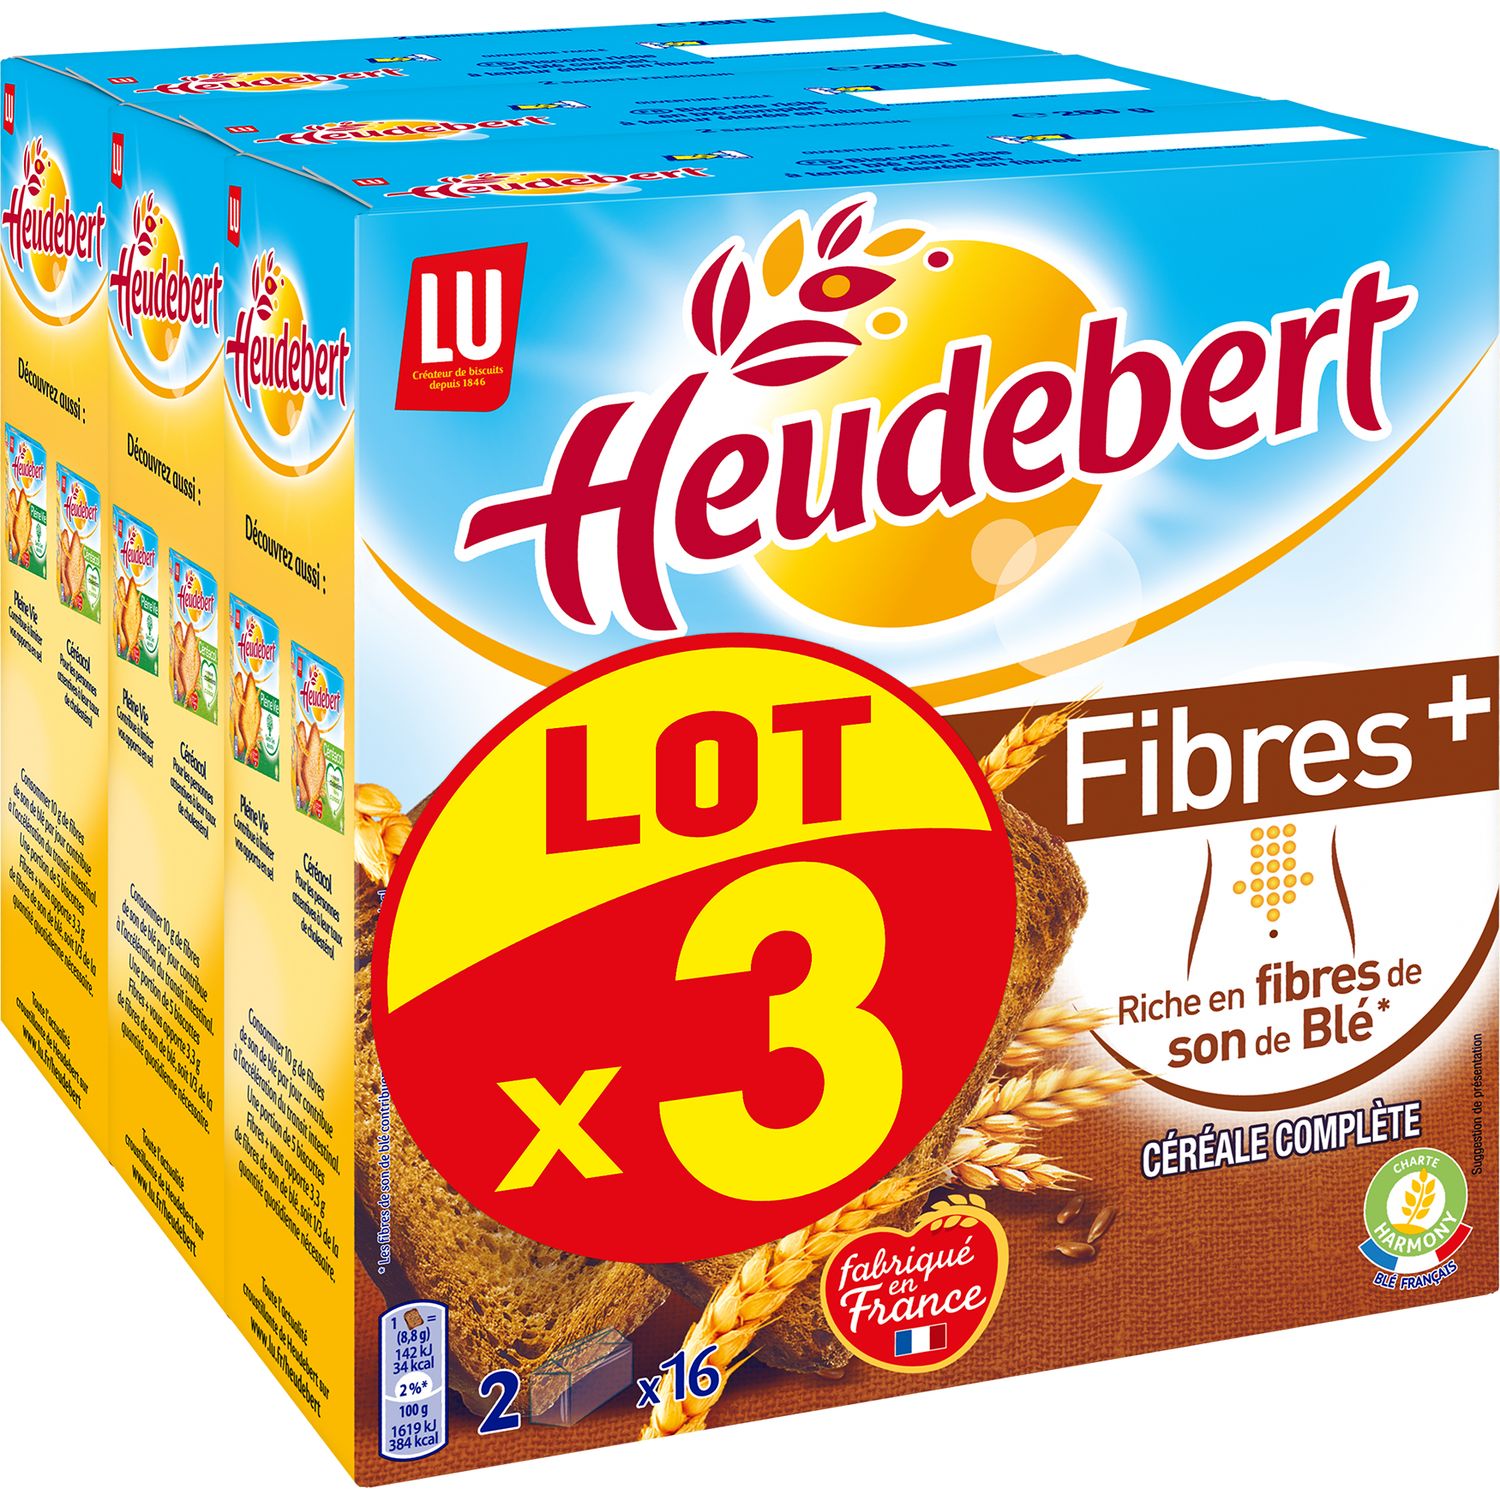 LU - Heudebert Biscottes, 290g Box